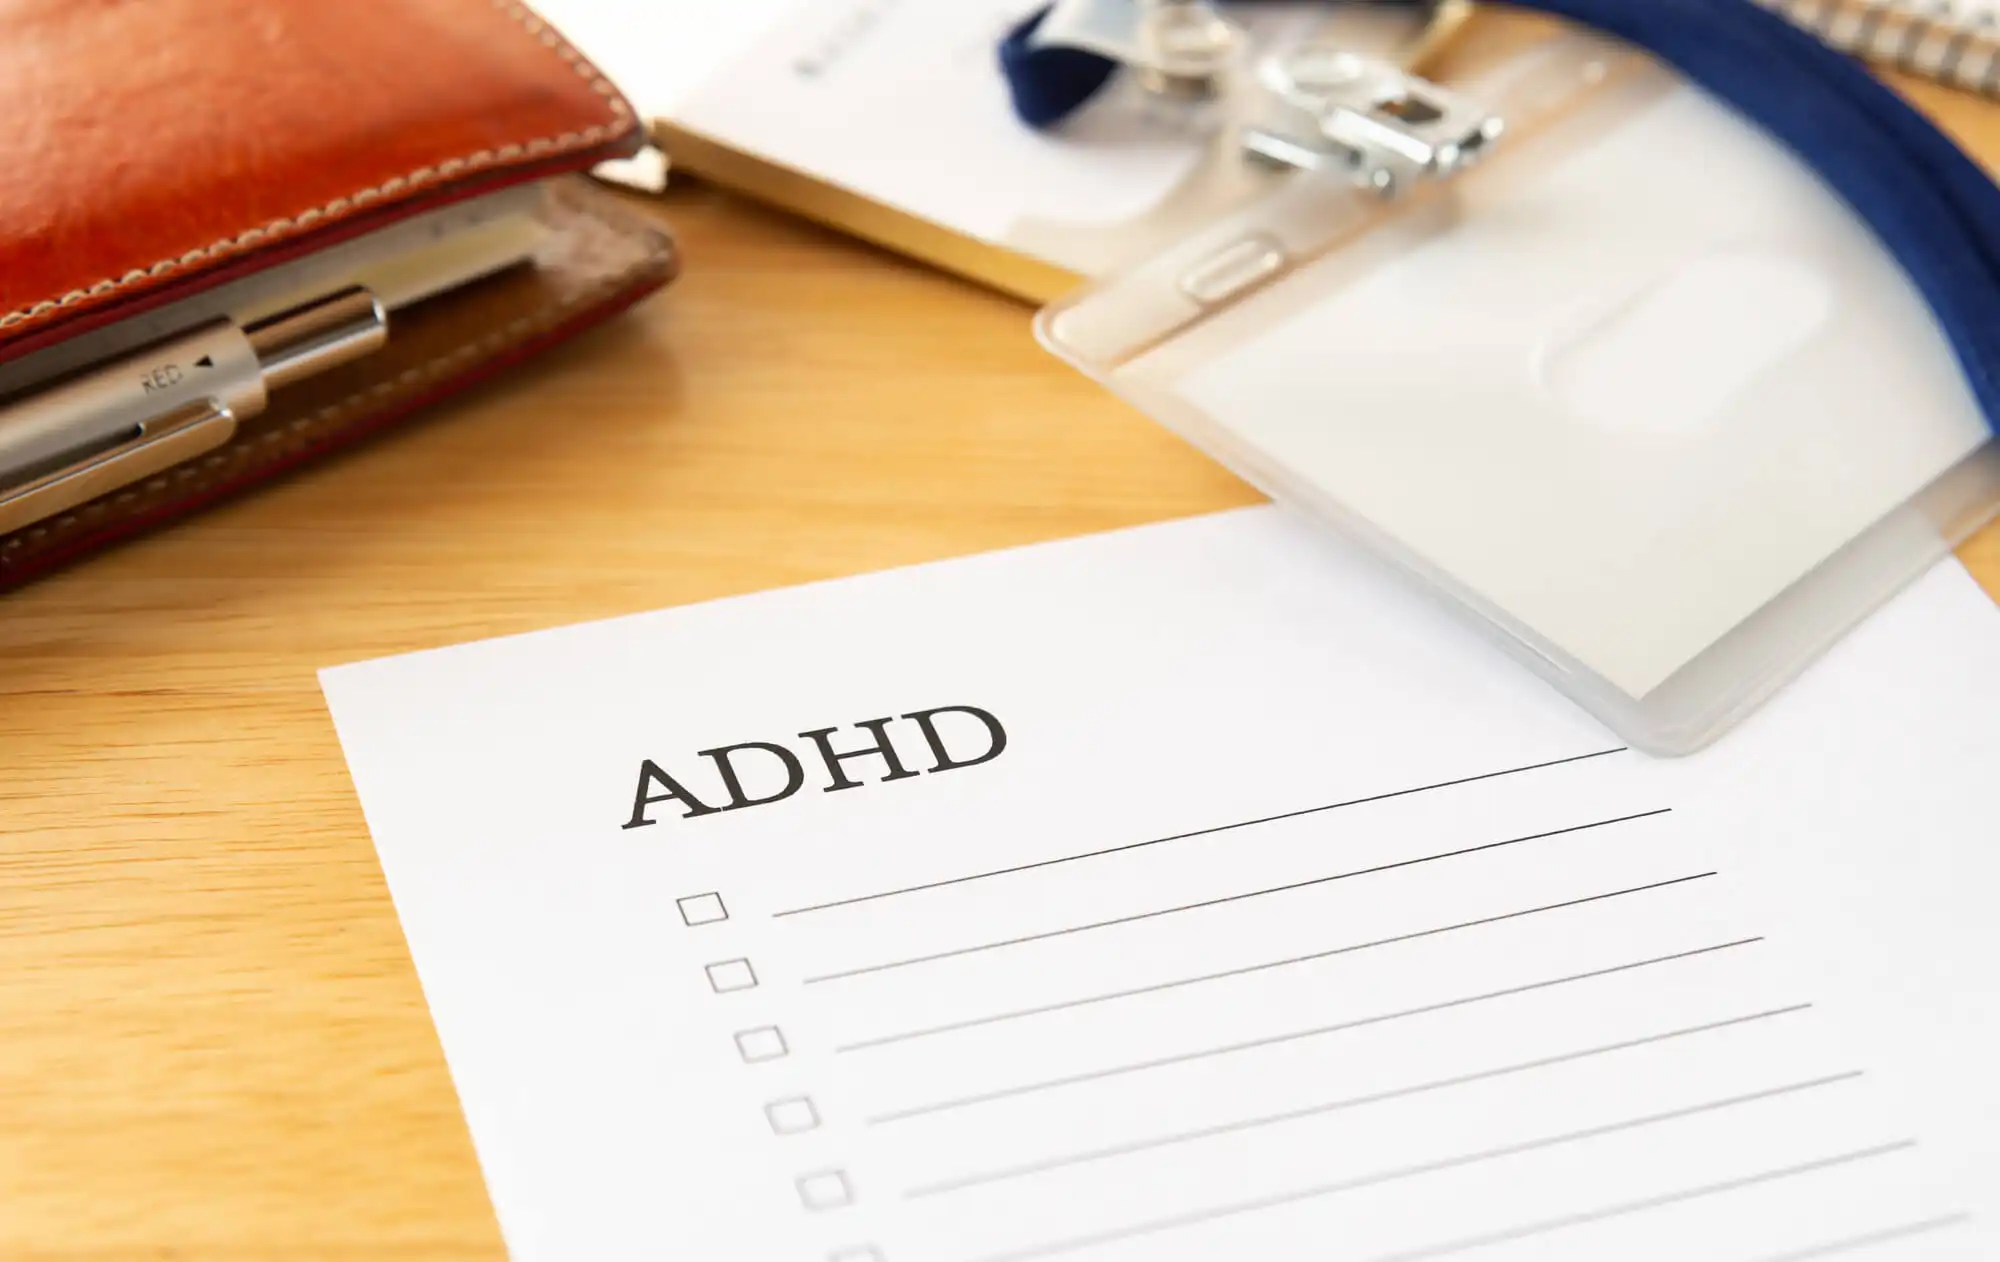 ADHD（注意欠如・多動性障害）